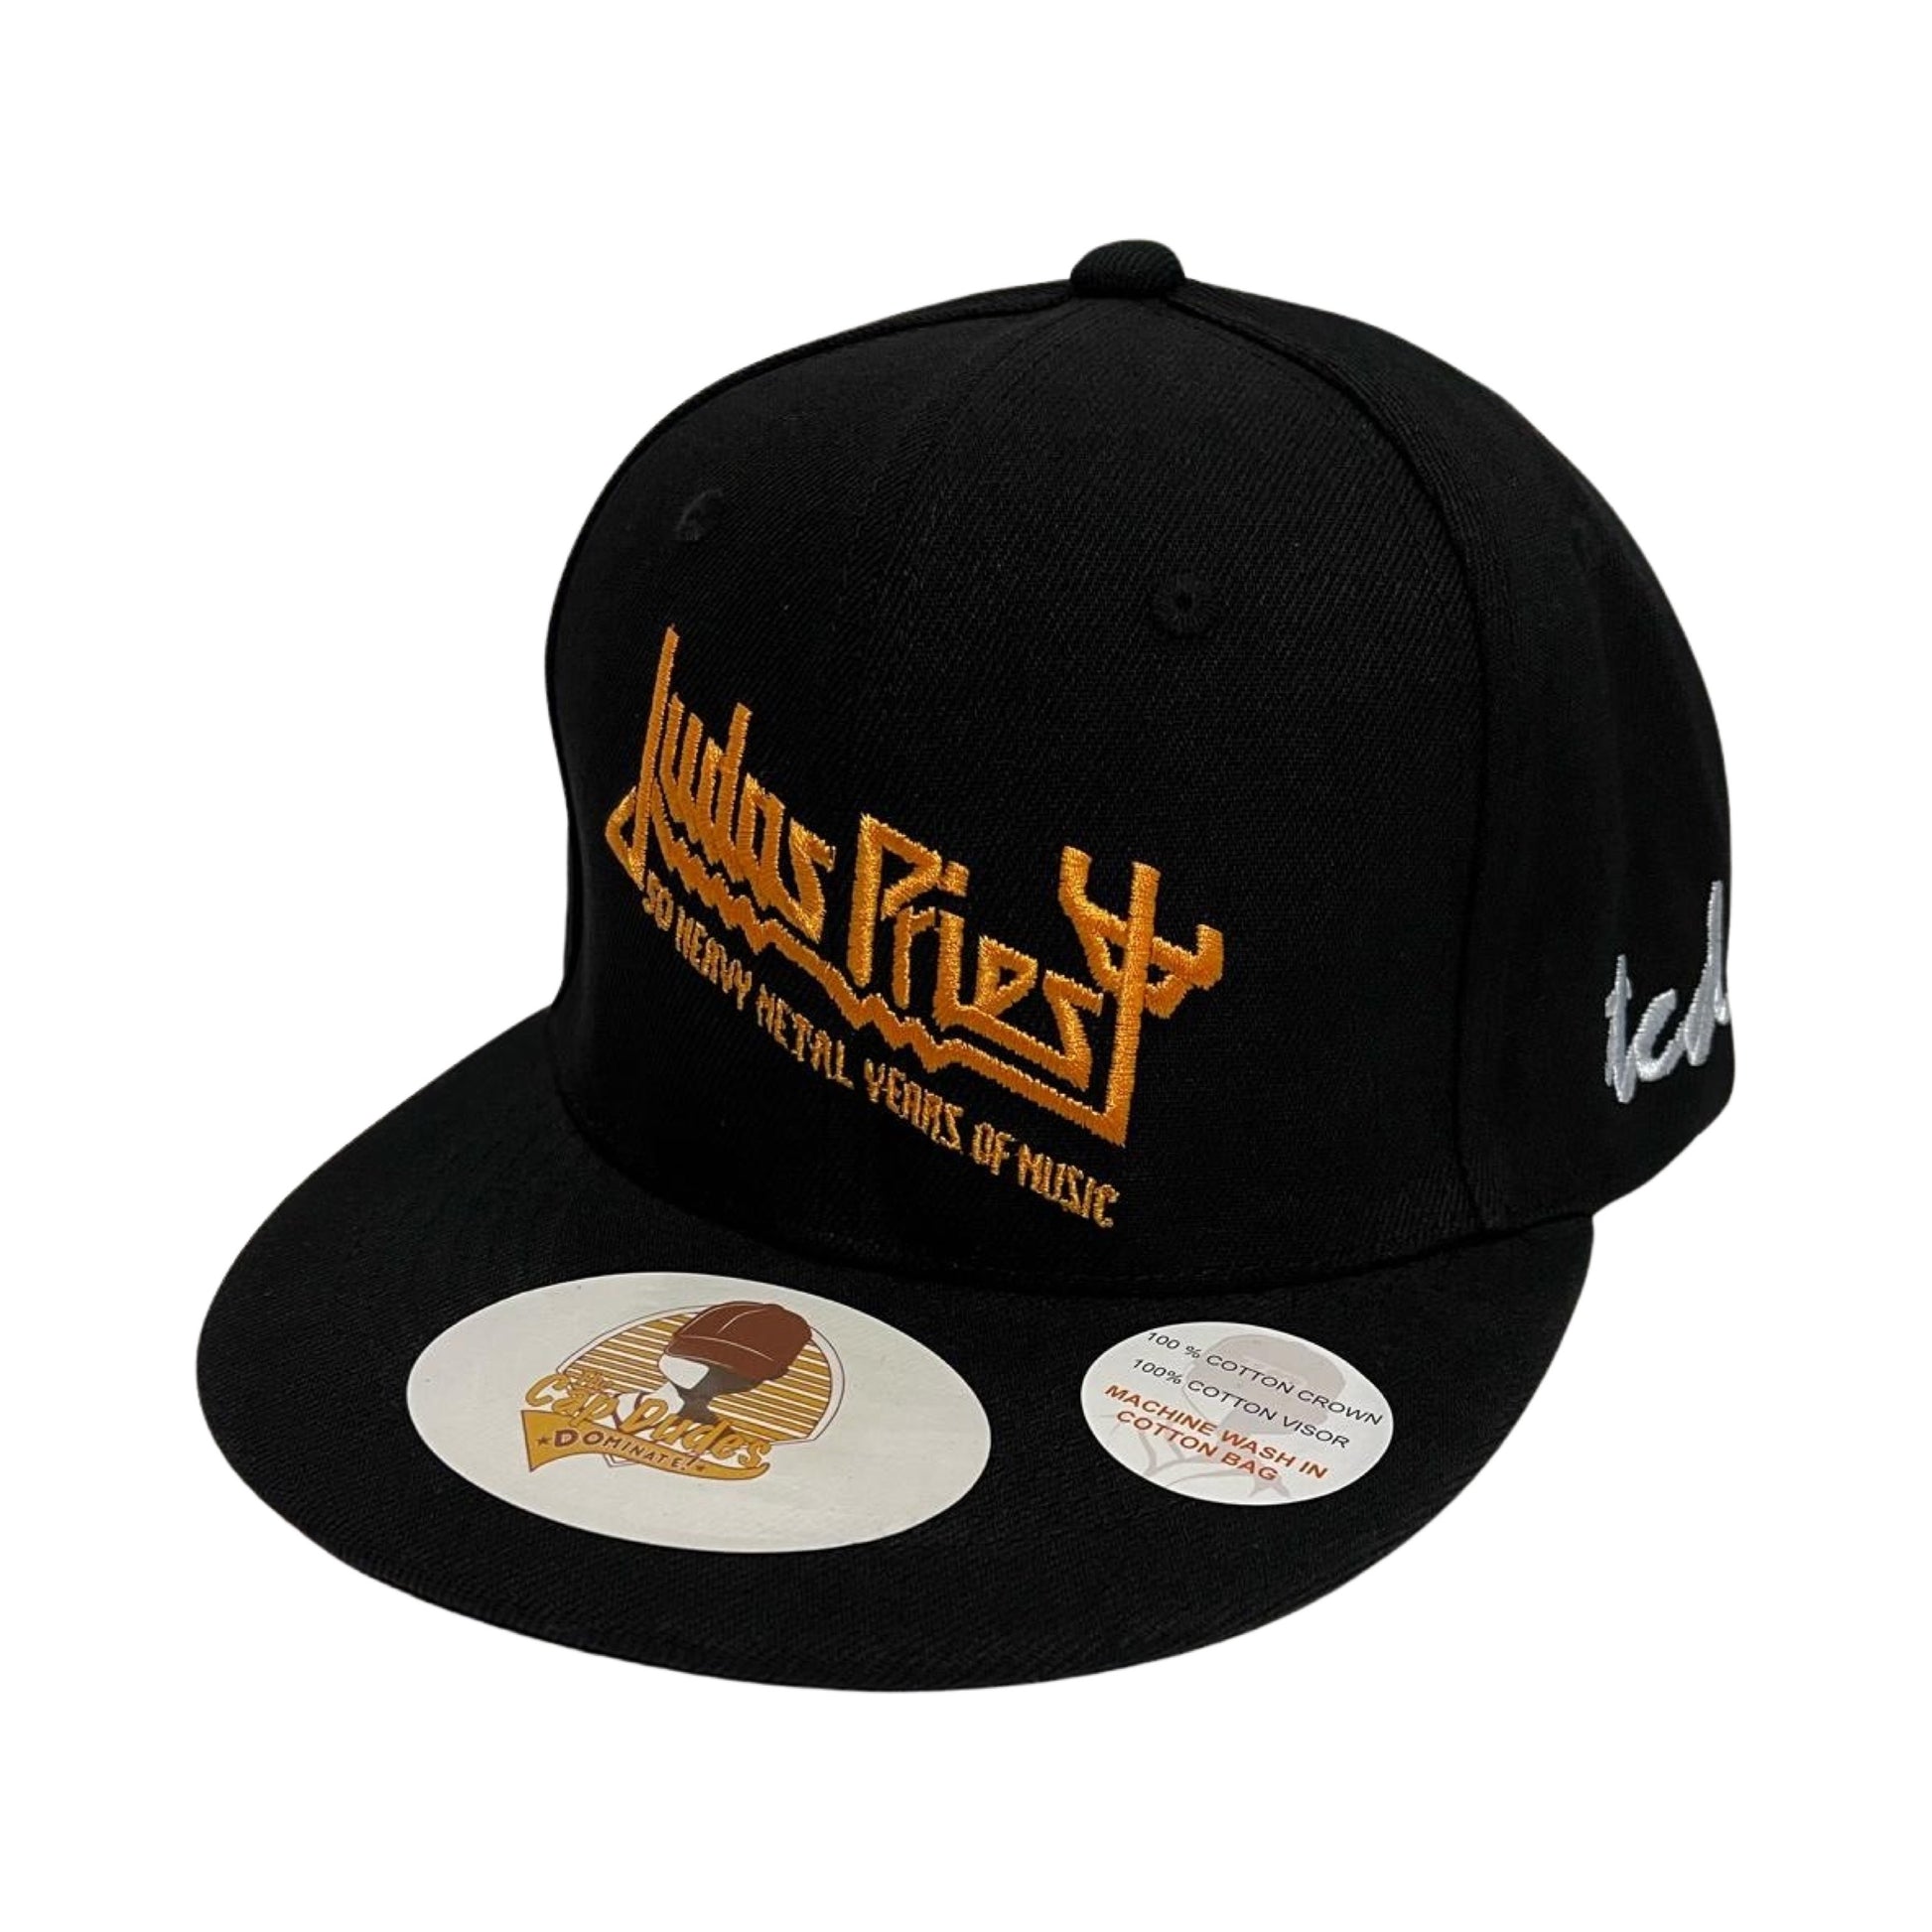 Judas Priest Black Baseball Hat - The Cap Dudes - Front View